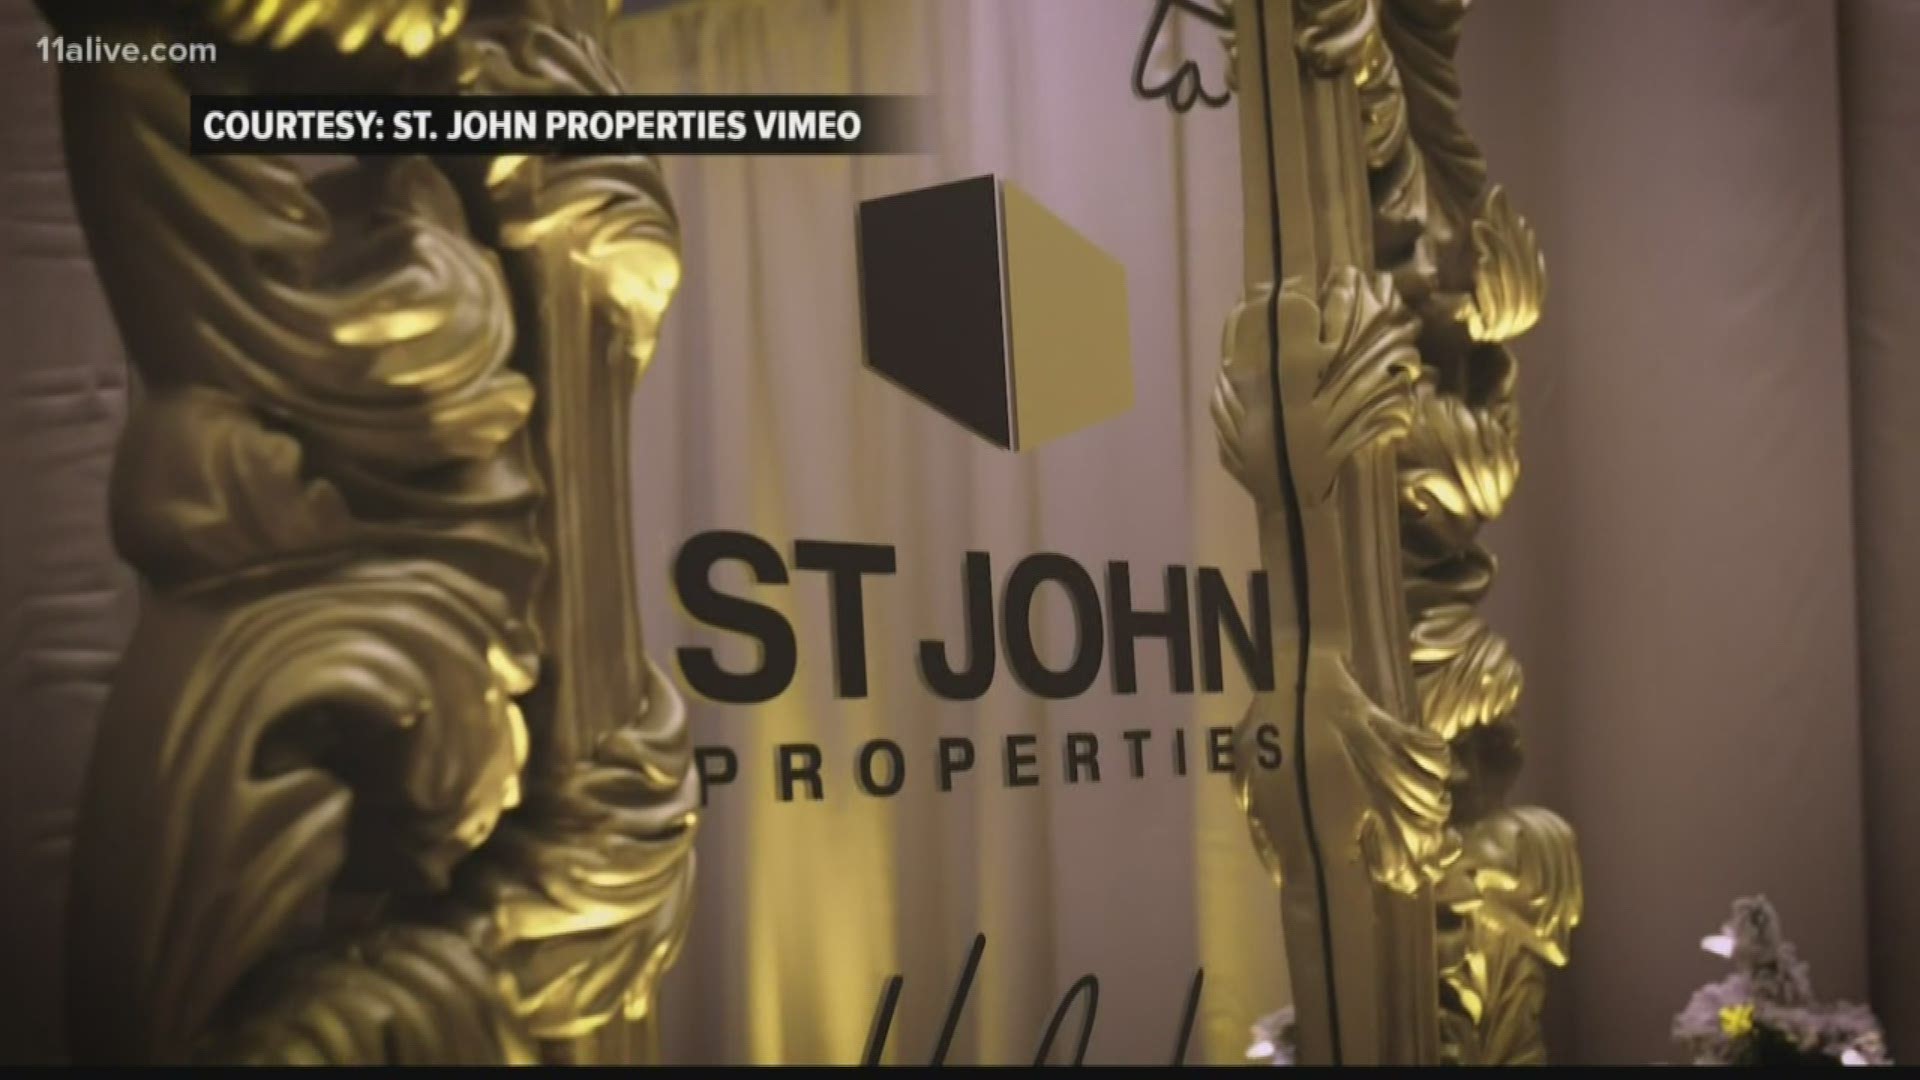 St. John Properties said all of its 198 employees will share a $10 million bonus.